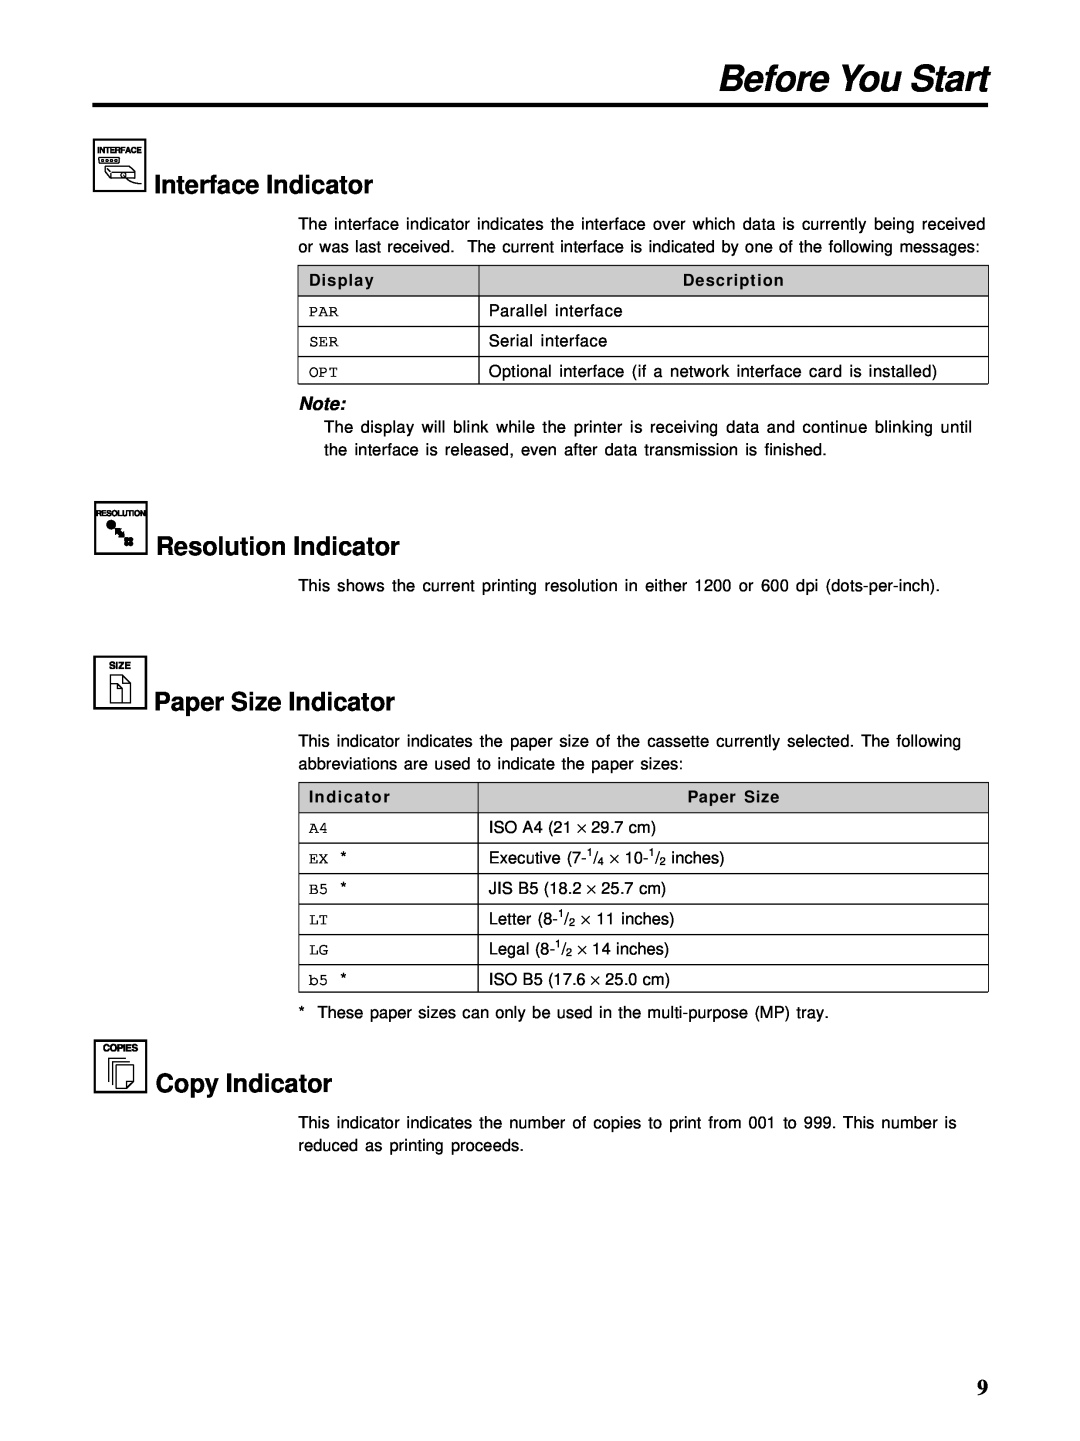 HP Ci 1100 manual Interface Indicator, Resolution Indicator, Paper Size Indicator, Copy Indicator, Before You Start 